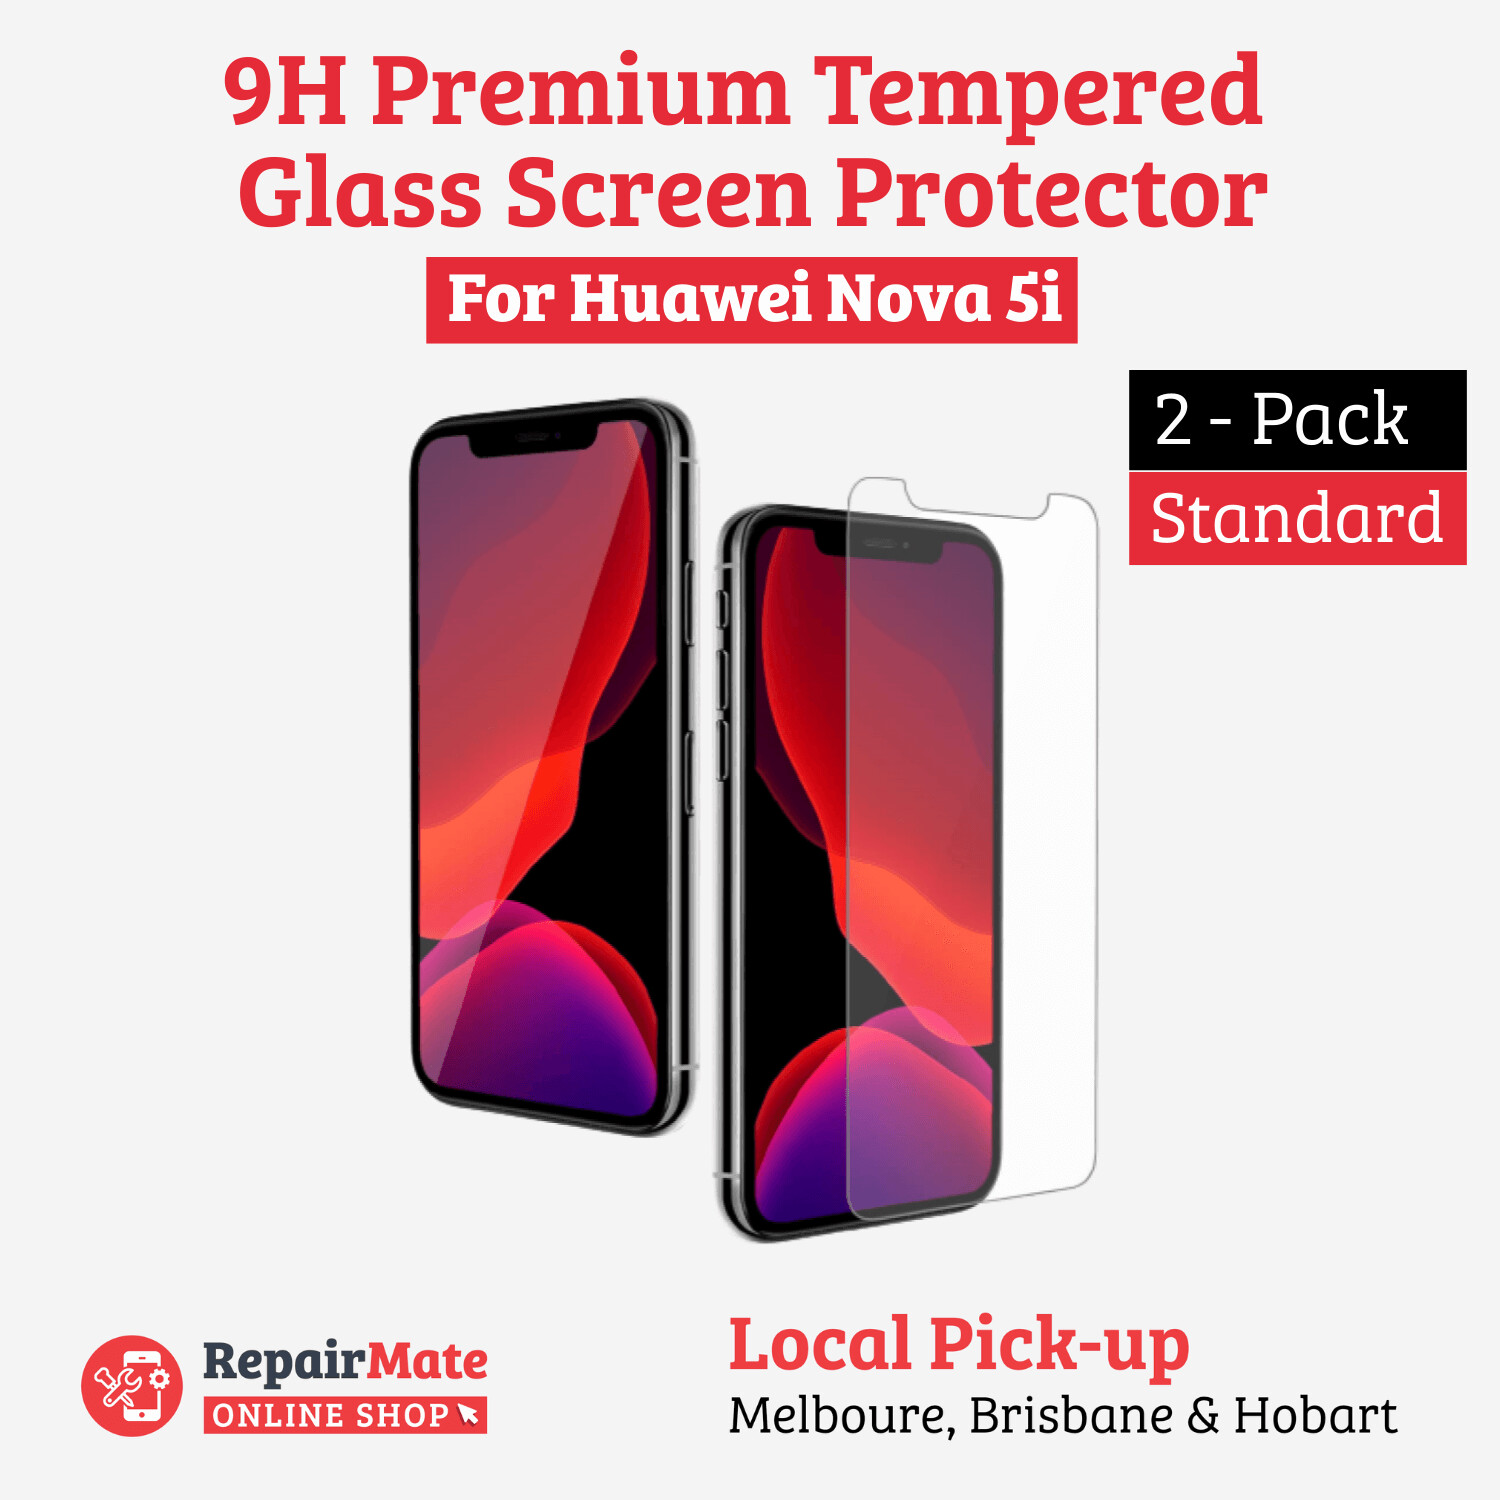 Huawei Nova 5i 9H Premium Tempered Glass Screen Protector [2 Pack]